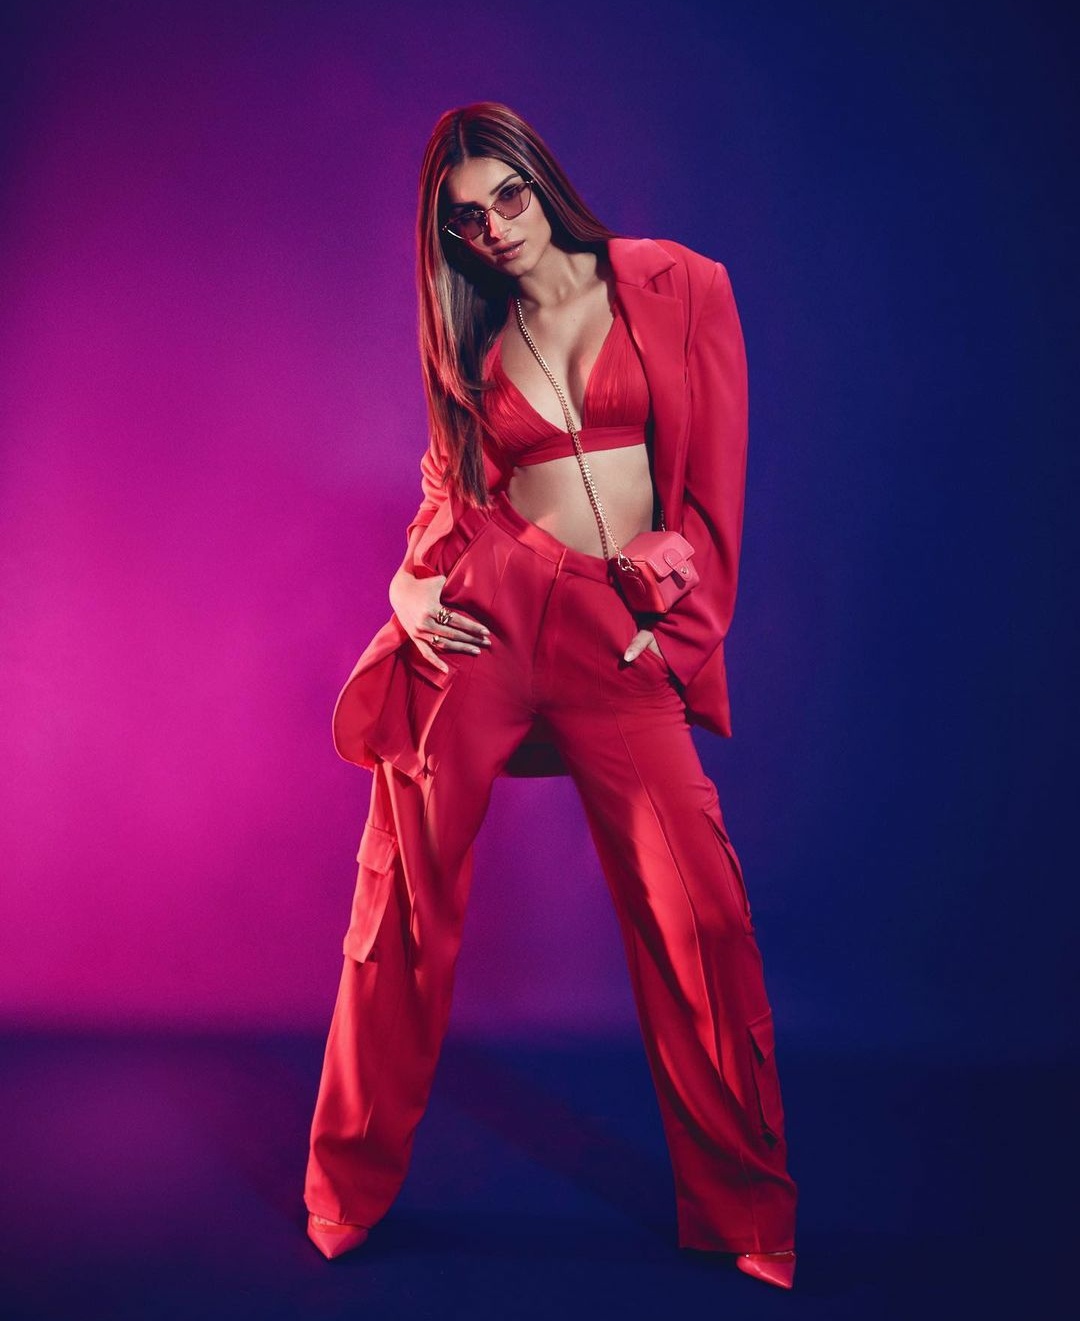 Tara Sutaria looks smoking hot look for Heropanti 2 promotions in red pantsuit